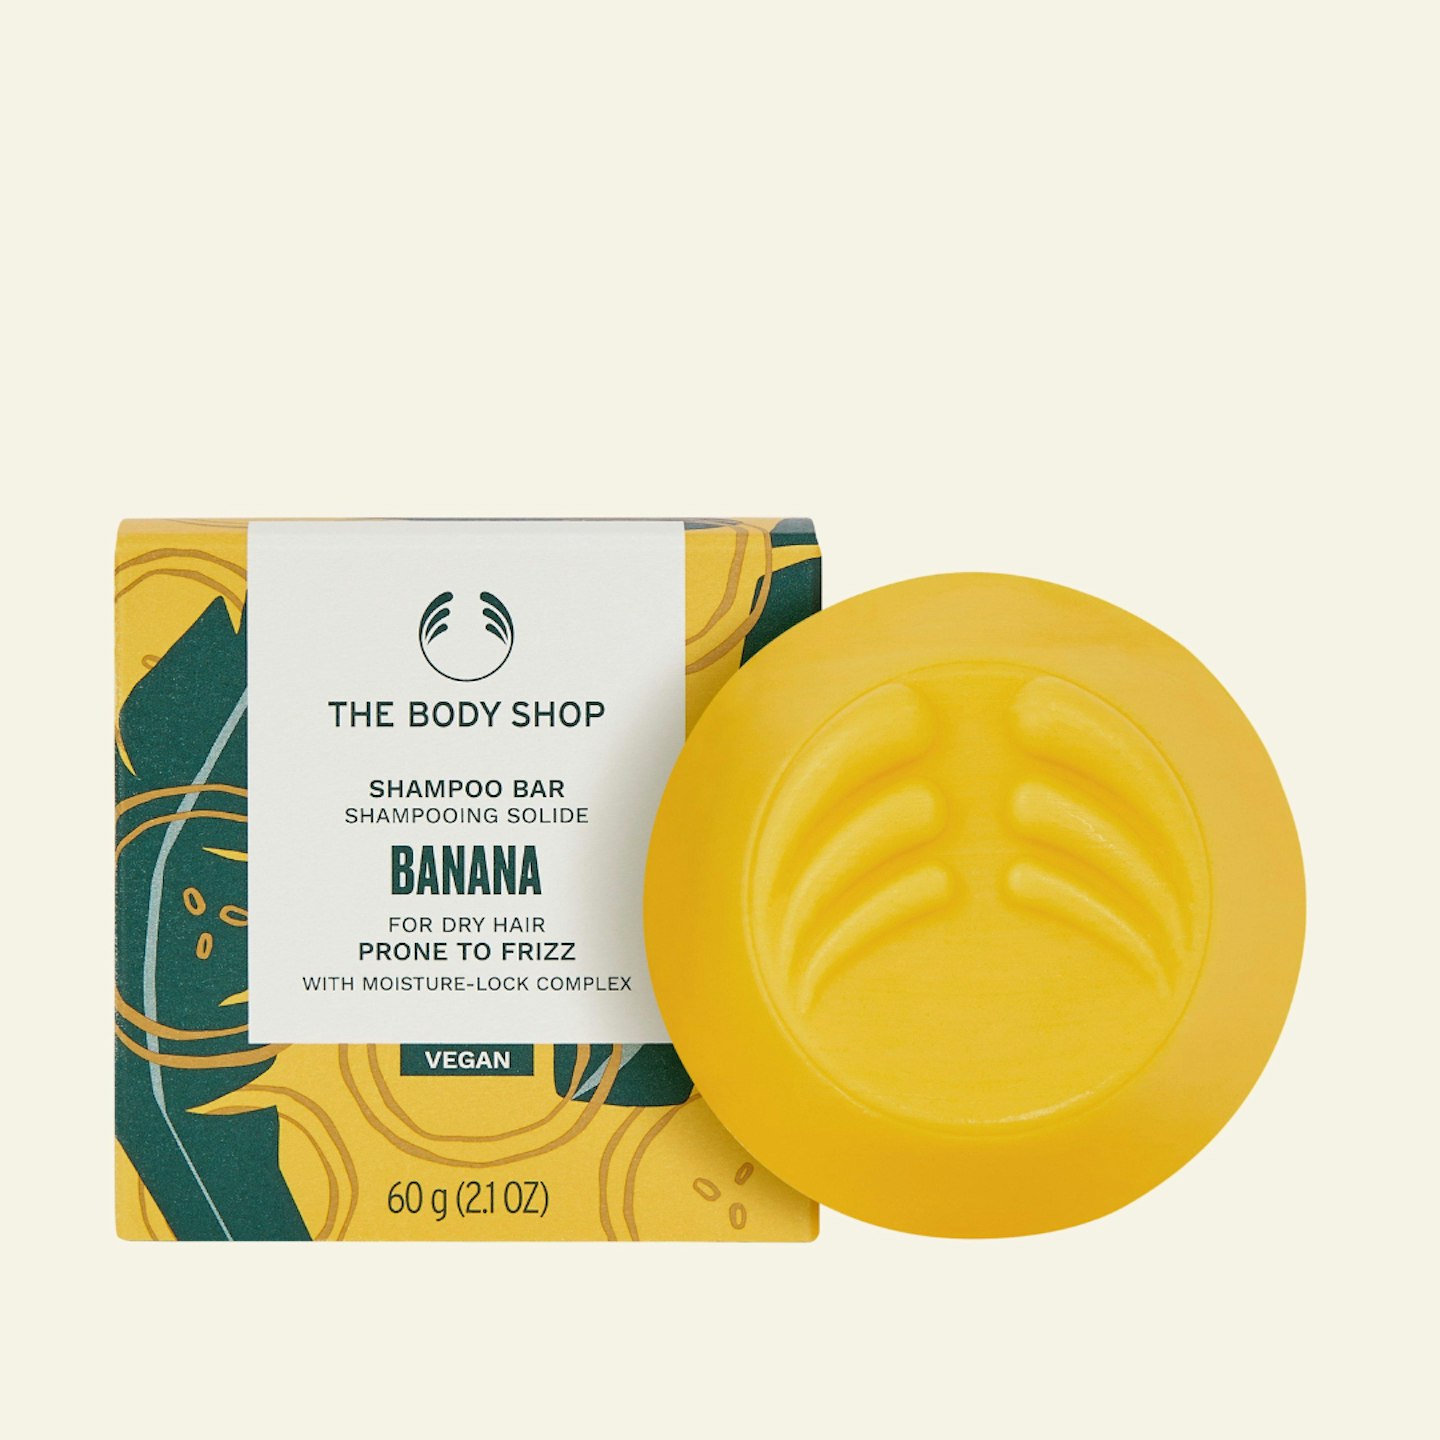 The Body Shop Banana Truly Nourishing Shampoo Bar